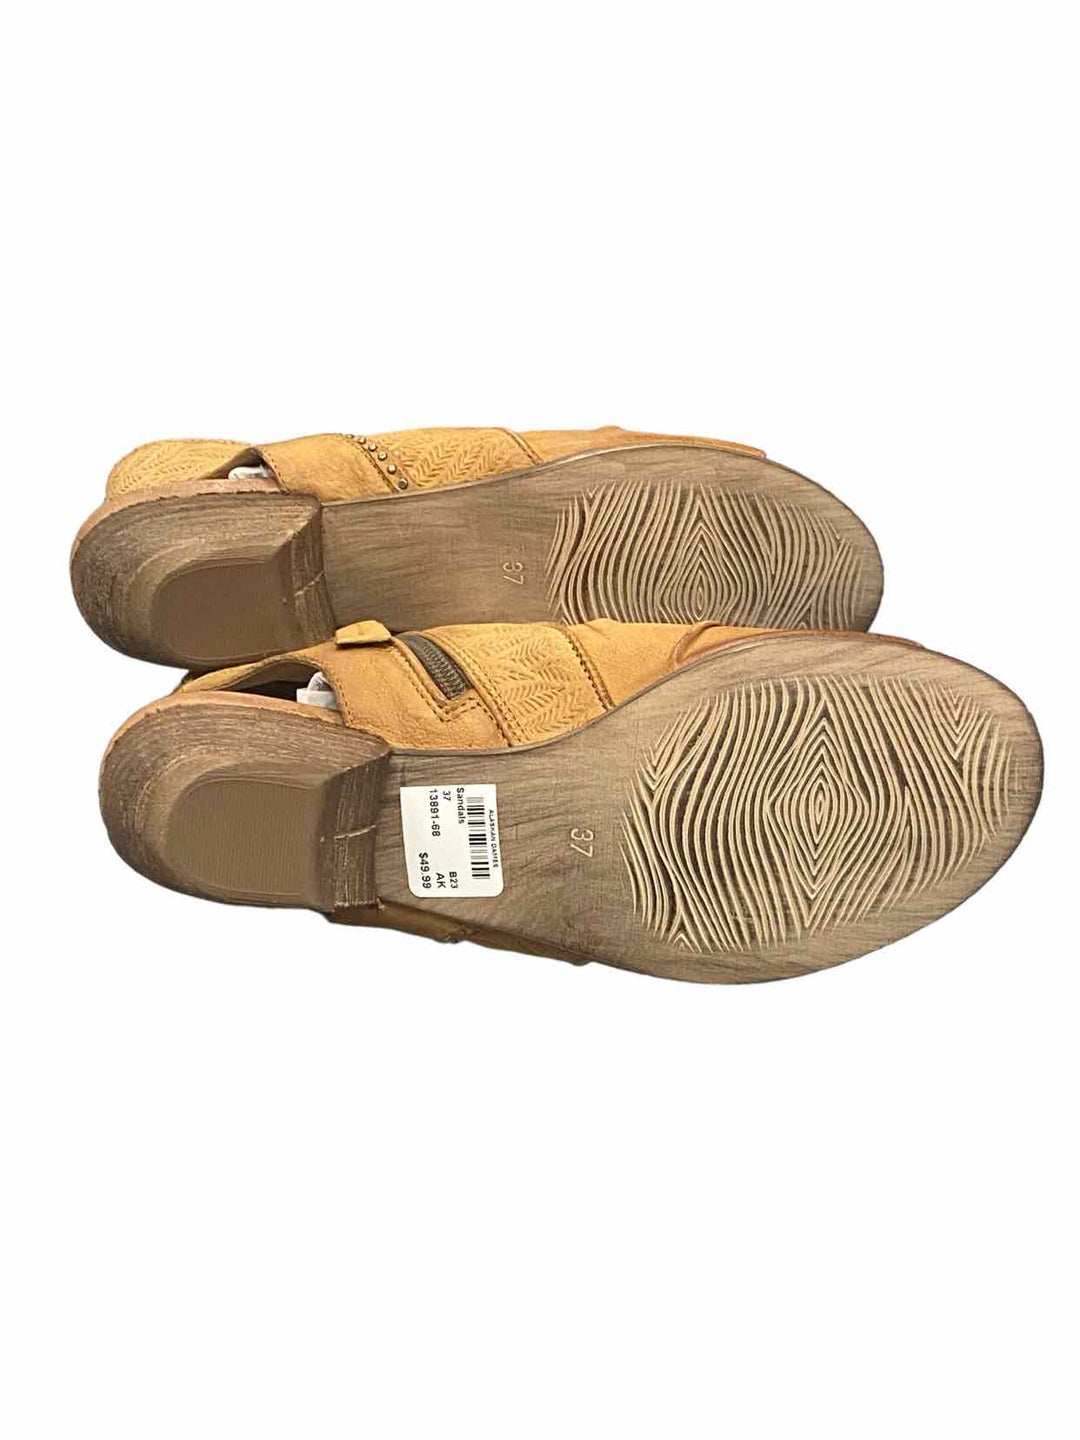 Miz Mooz Shoe Size 37 Brown Leather NWOT Sandals